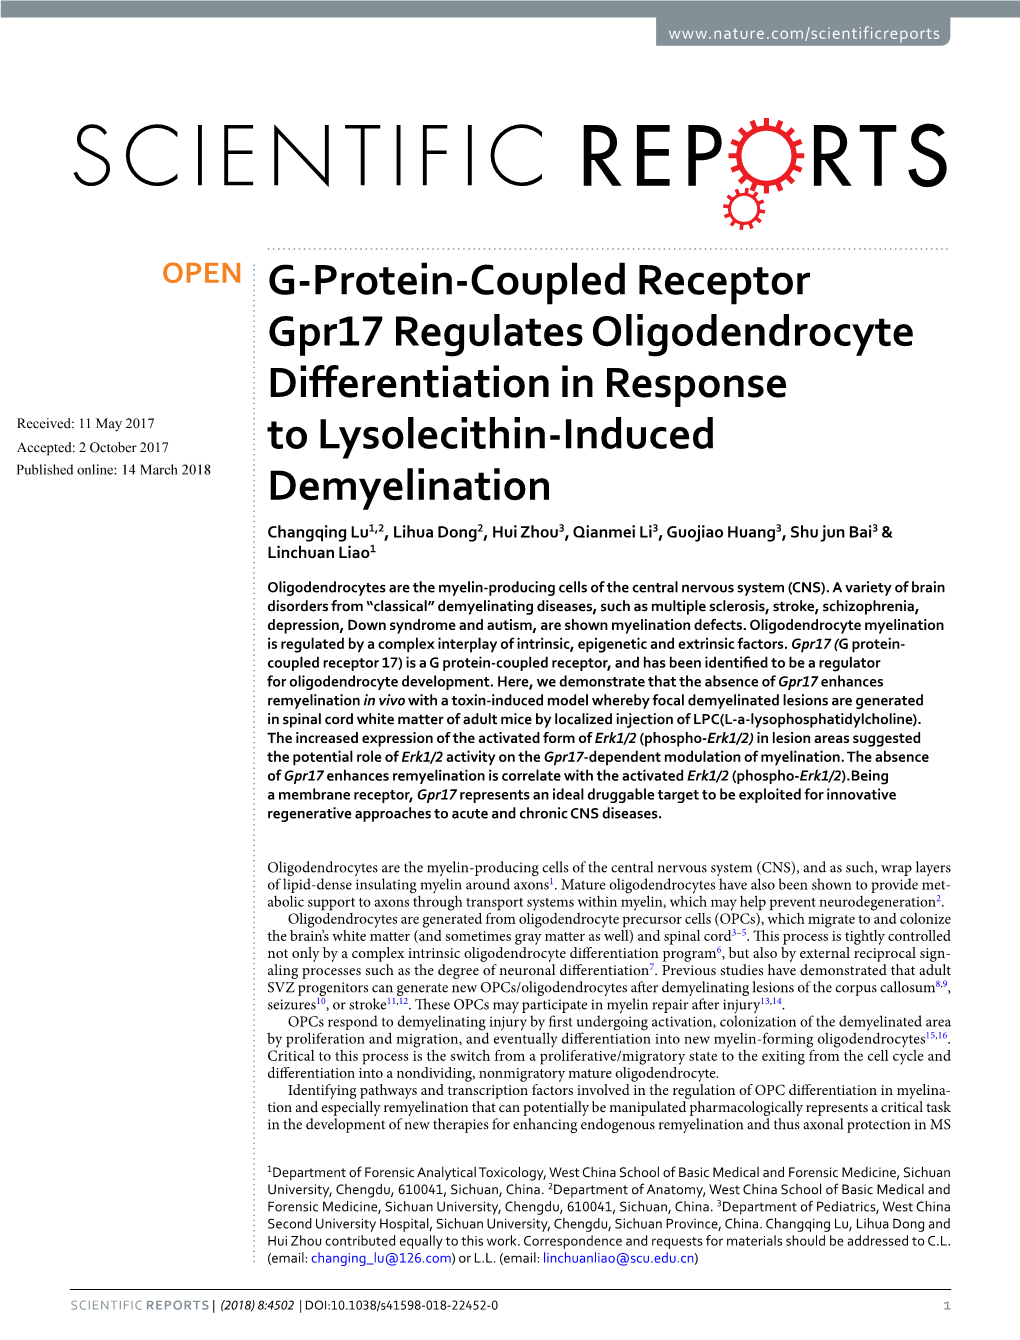 G-Protein-Coupled Receptor Gpr17 Regulates Oligodendrocyte